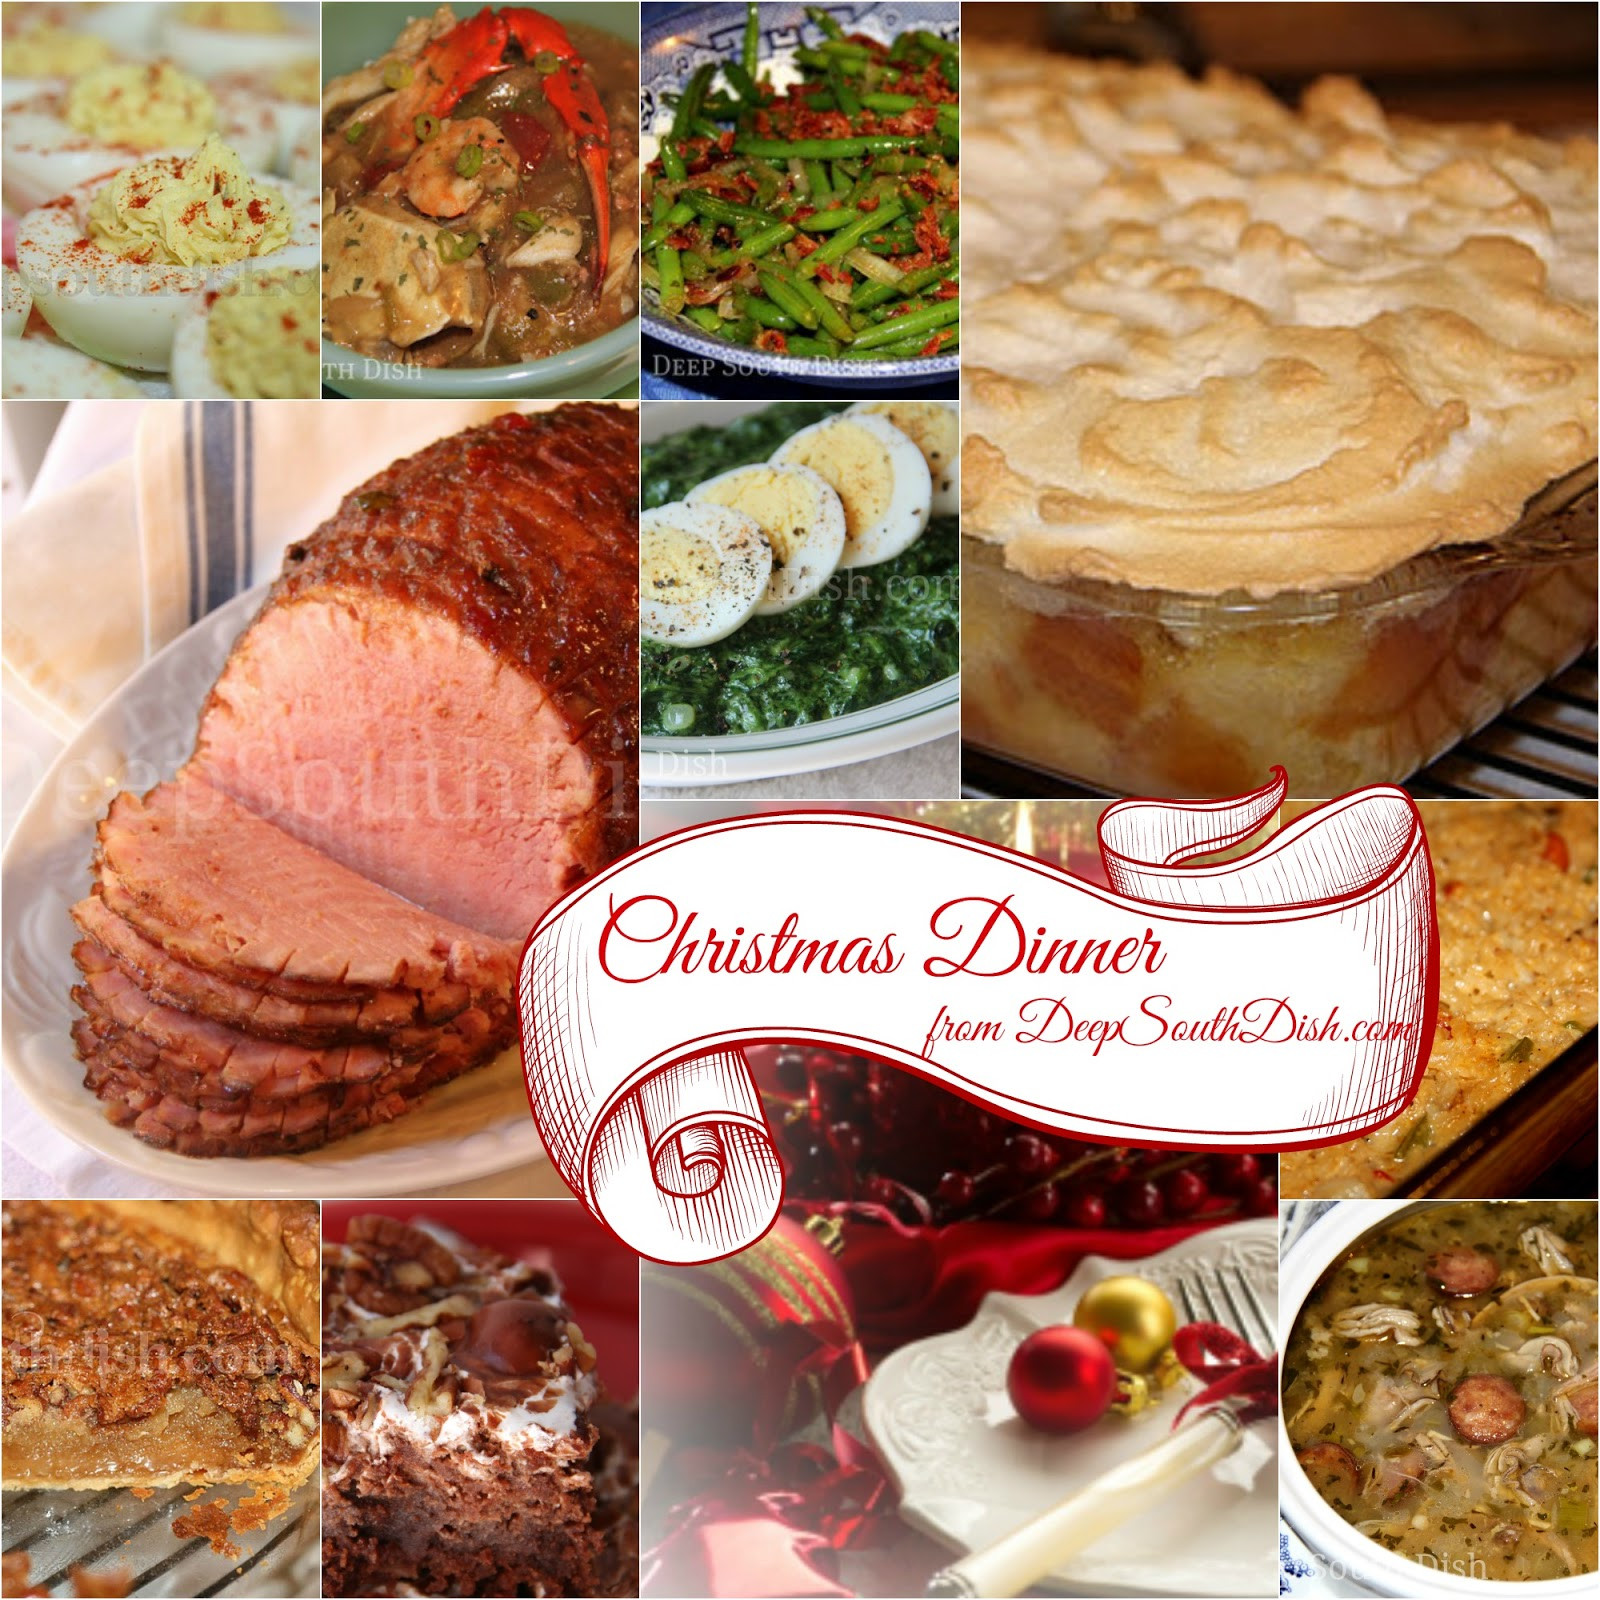 Southern Christmas Dinner Menu Ideas
 Deep South Dish Southern Christmas Dinner Menu and Recipe